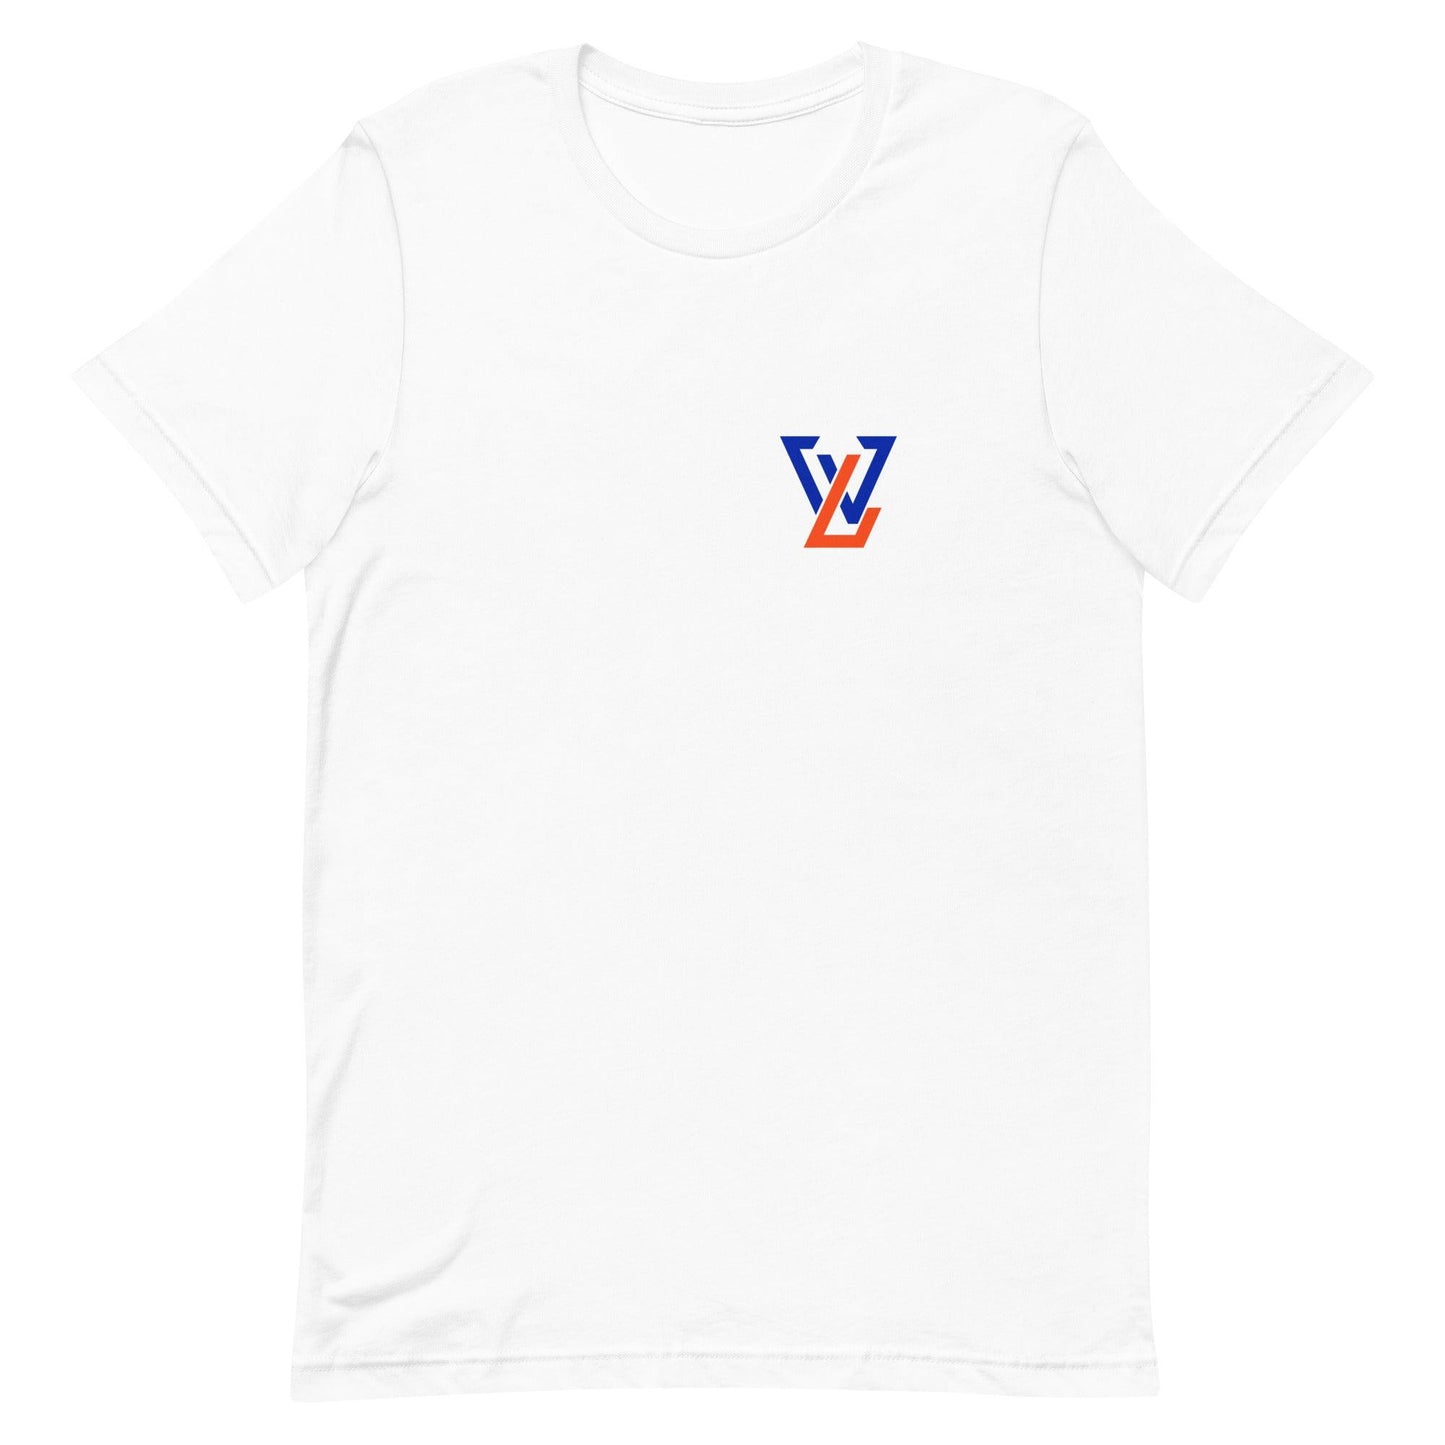 Wyatt Langford “WL” t-shirt - Fan Arch